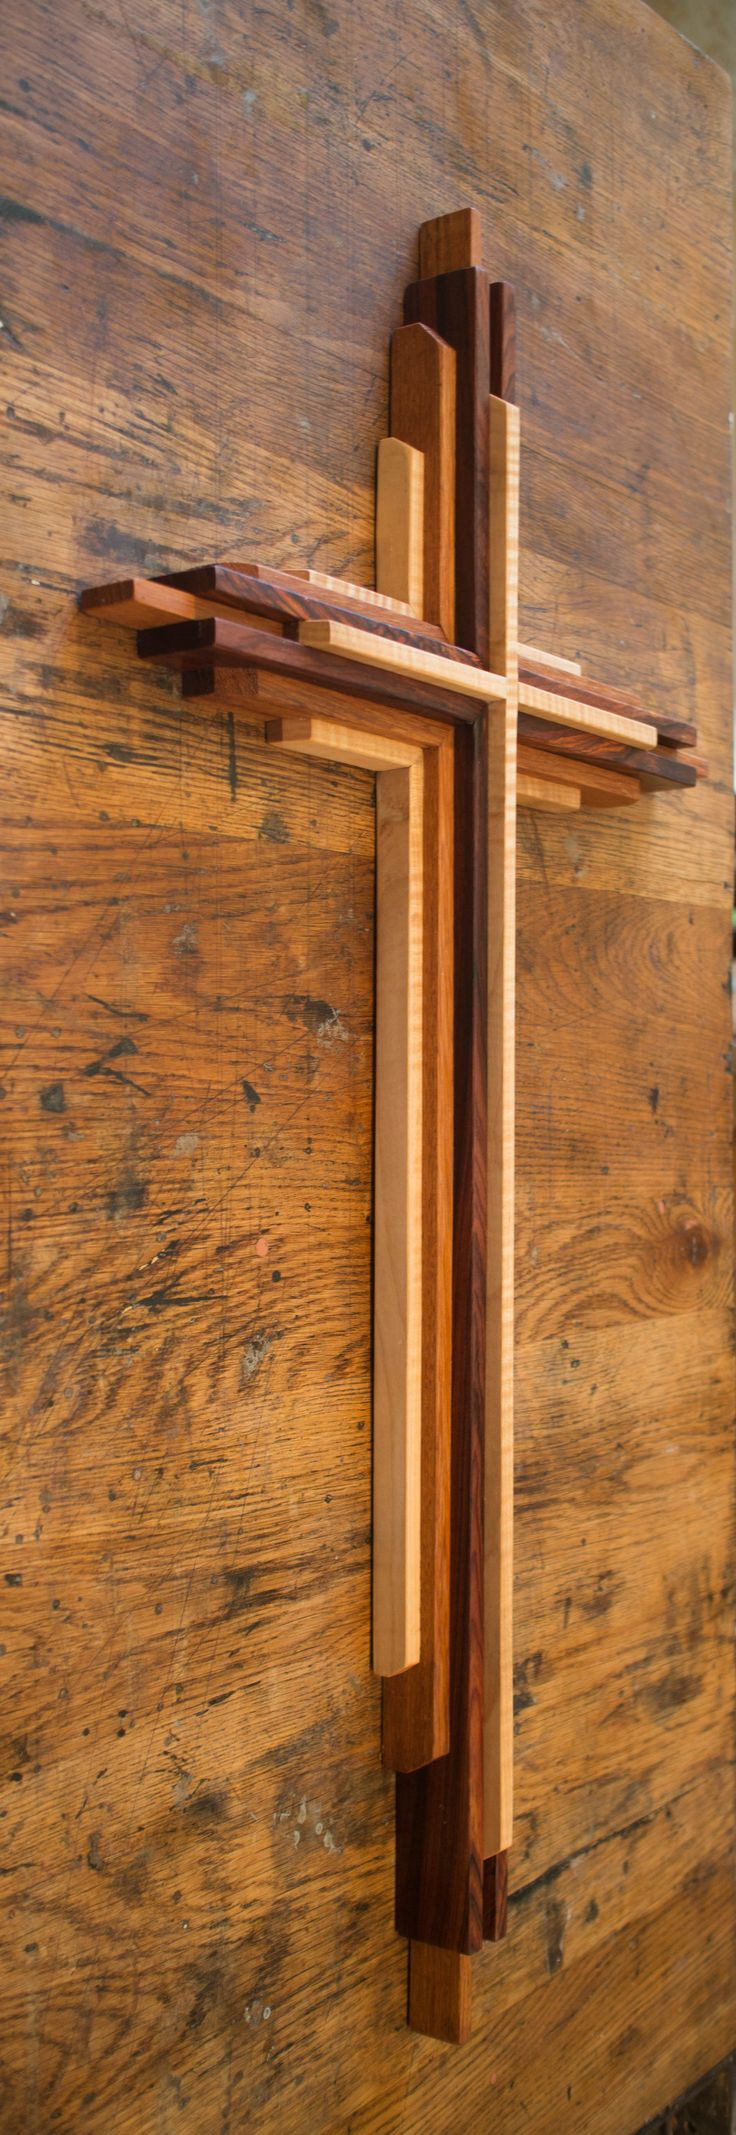 DIY Wood Crosses
 30 best Handmade Wooden Crosses images on Pinterest